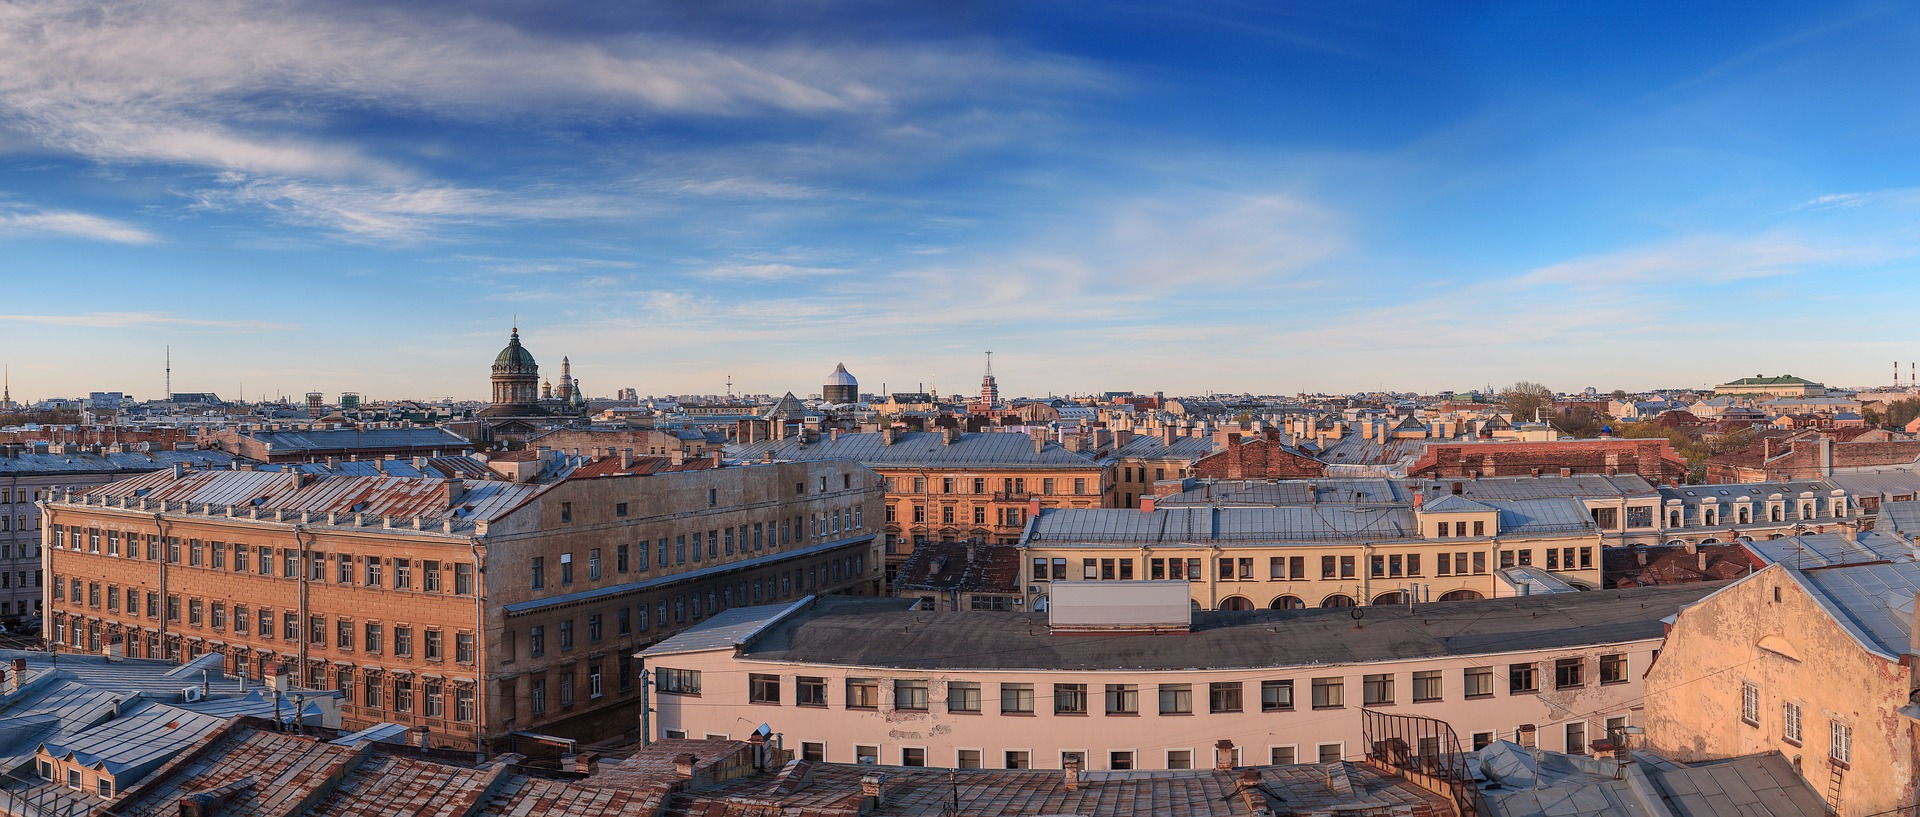 St Petersburg Panorama